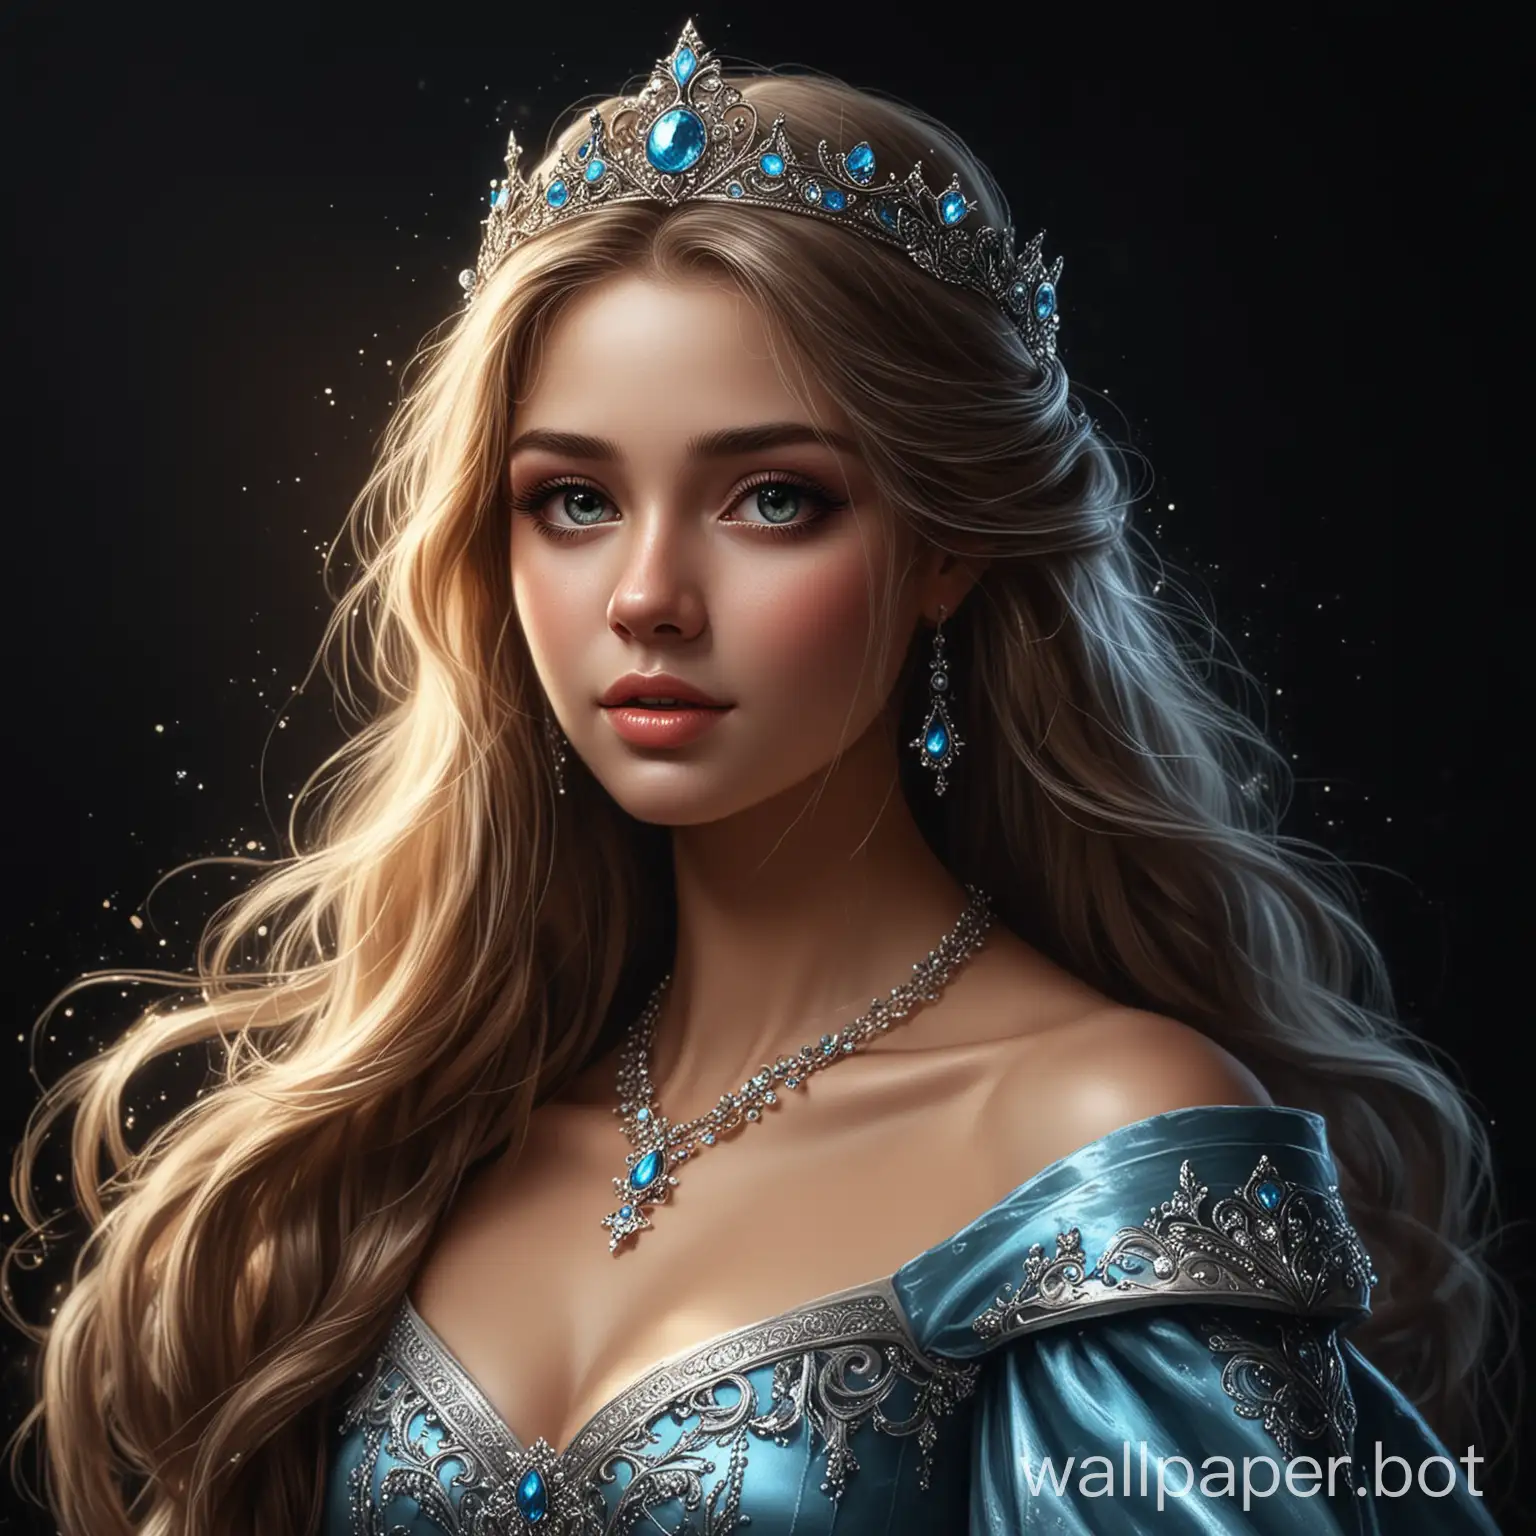 Draw a fantasy beautiful princess on a black background